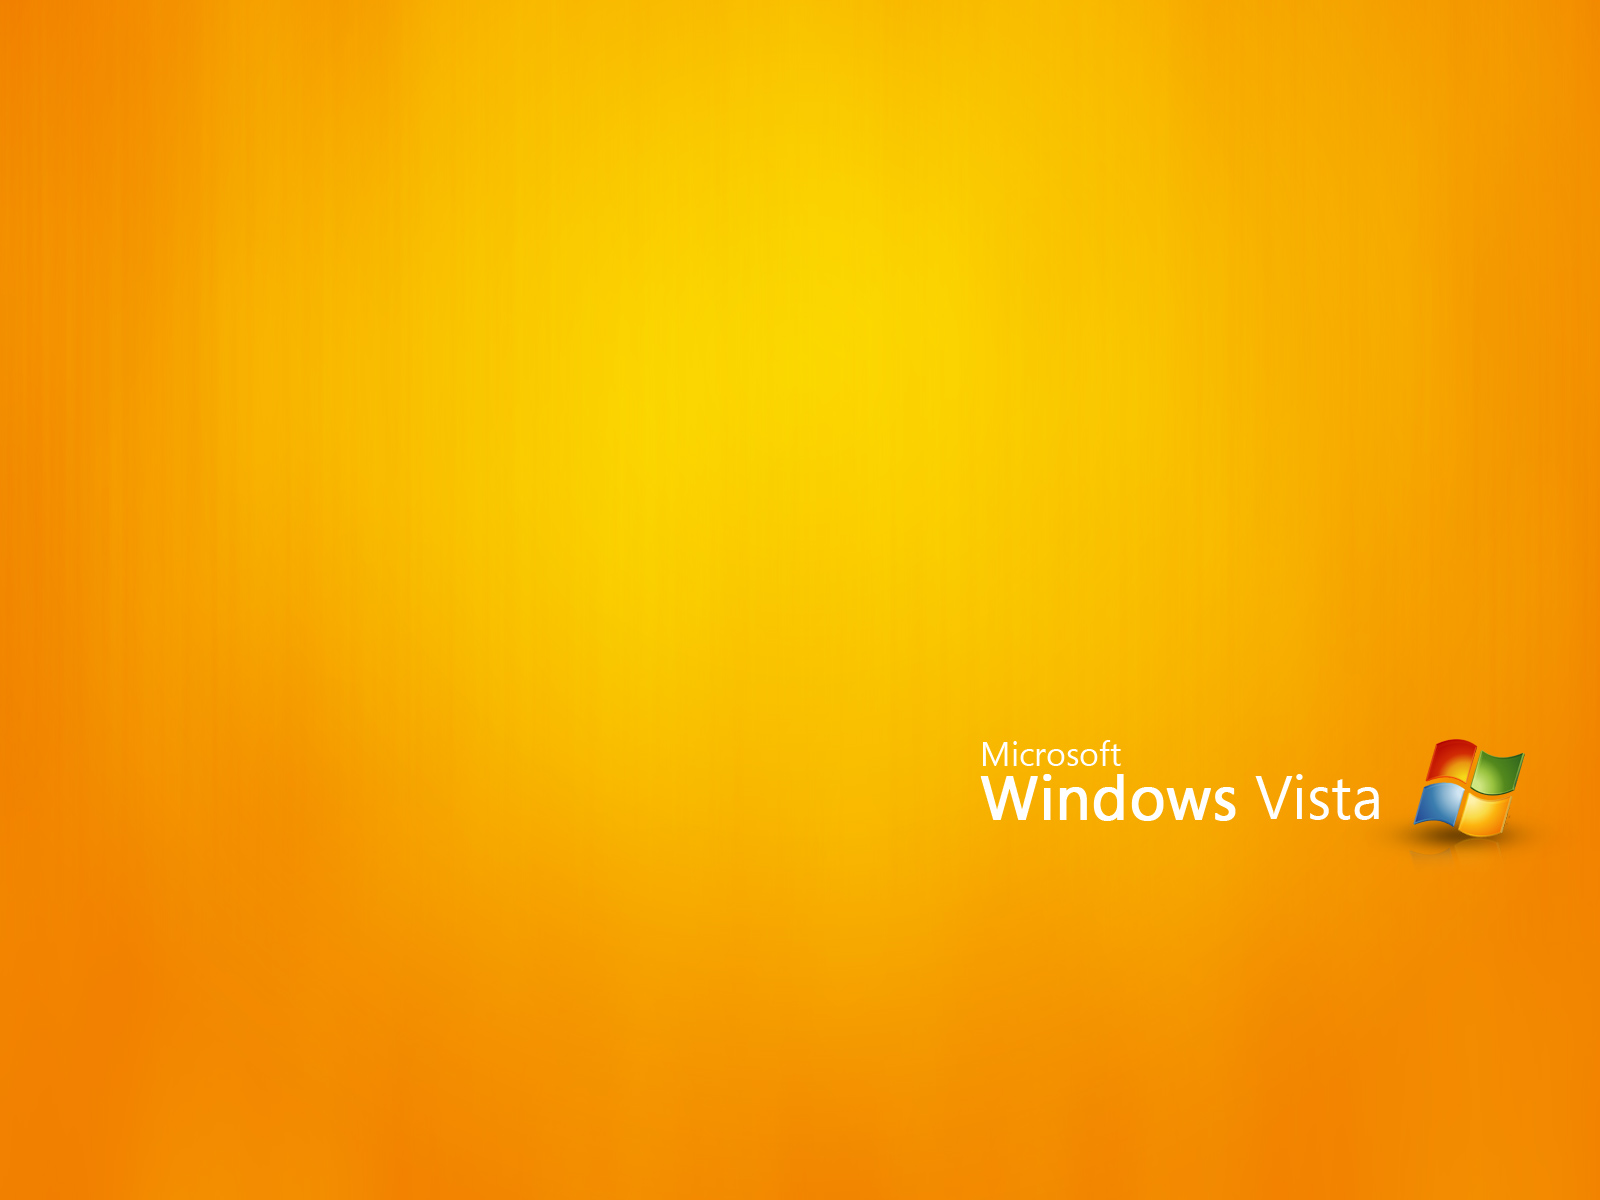 Windows Vista Orange Flat Wallpaper Geekpedia